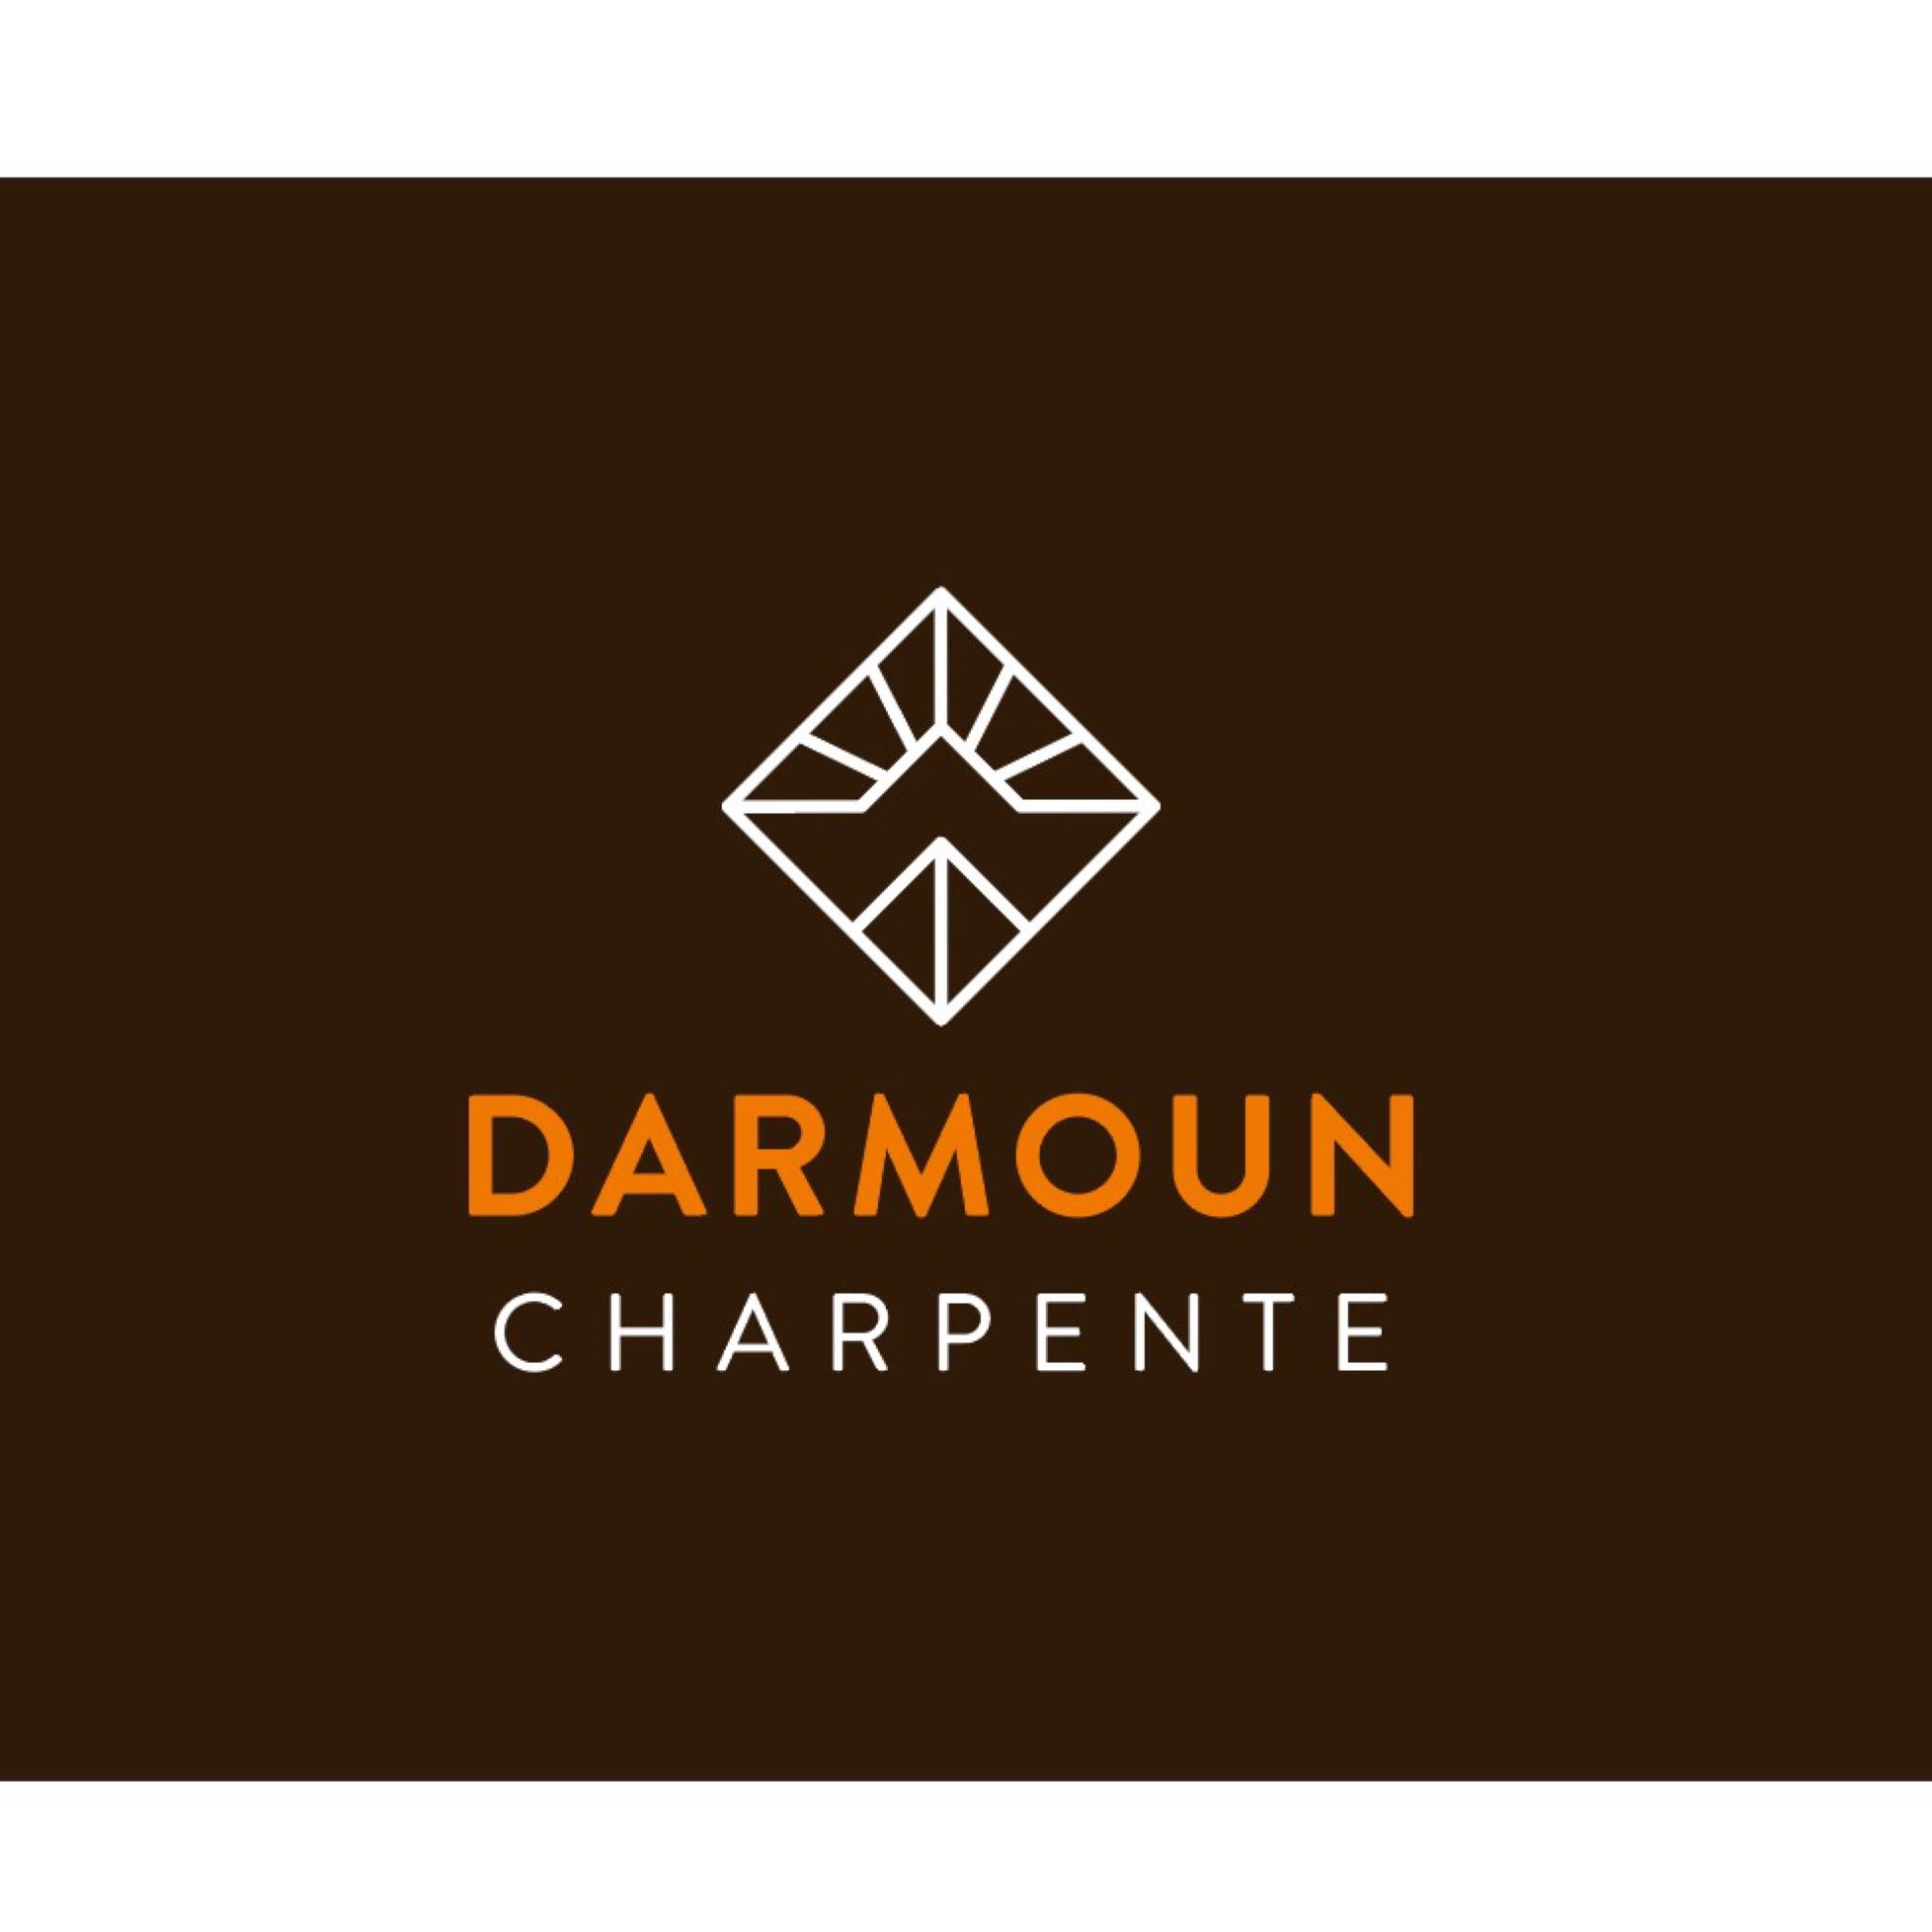 Darmoun Charpente ; Thomas Darmoun